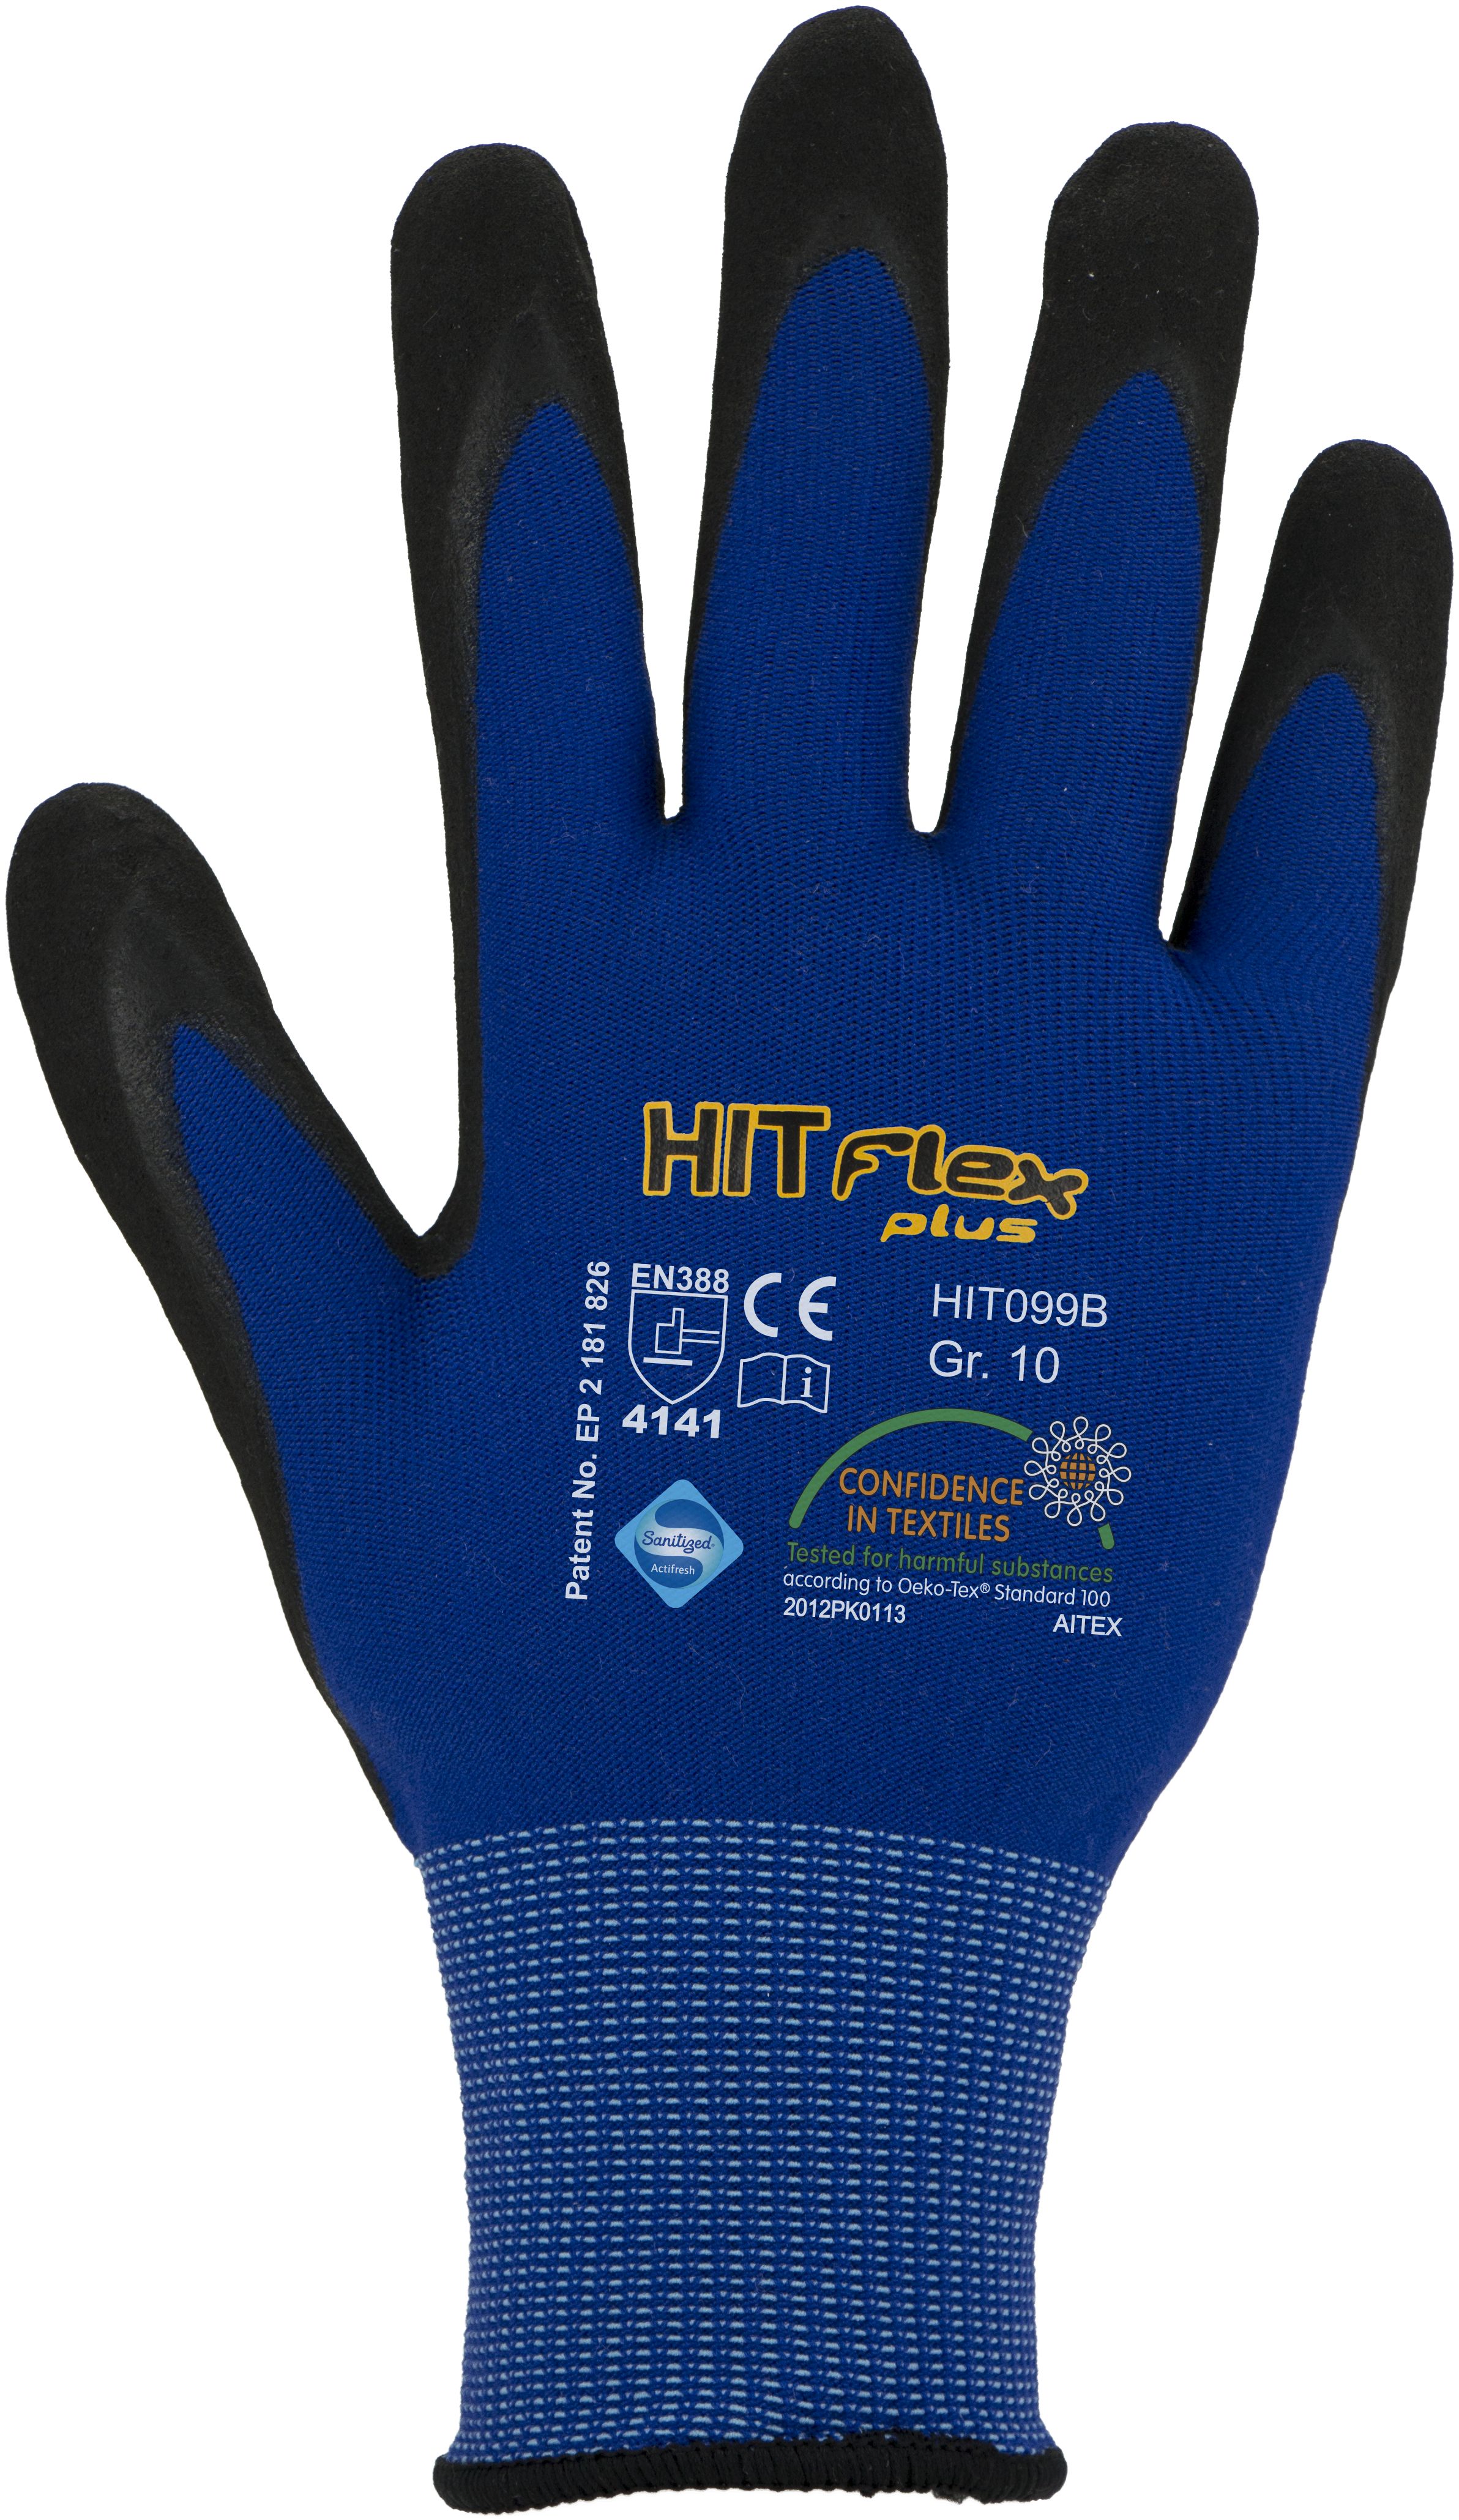 ASATEX HIT099 HITFlex Plus mit atmungsaktiver Nitril-Mikroschaumbeschichtung grau/blau